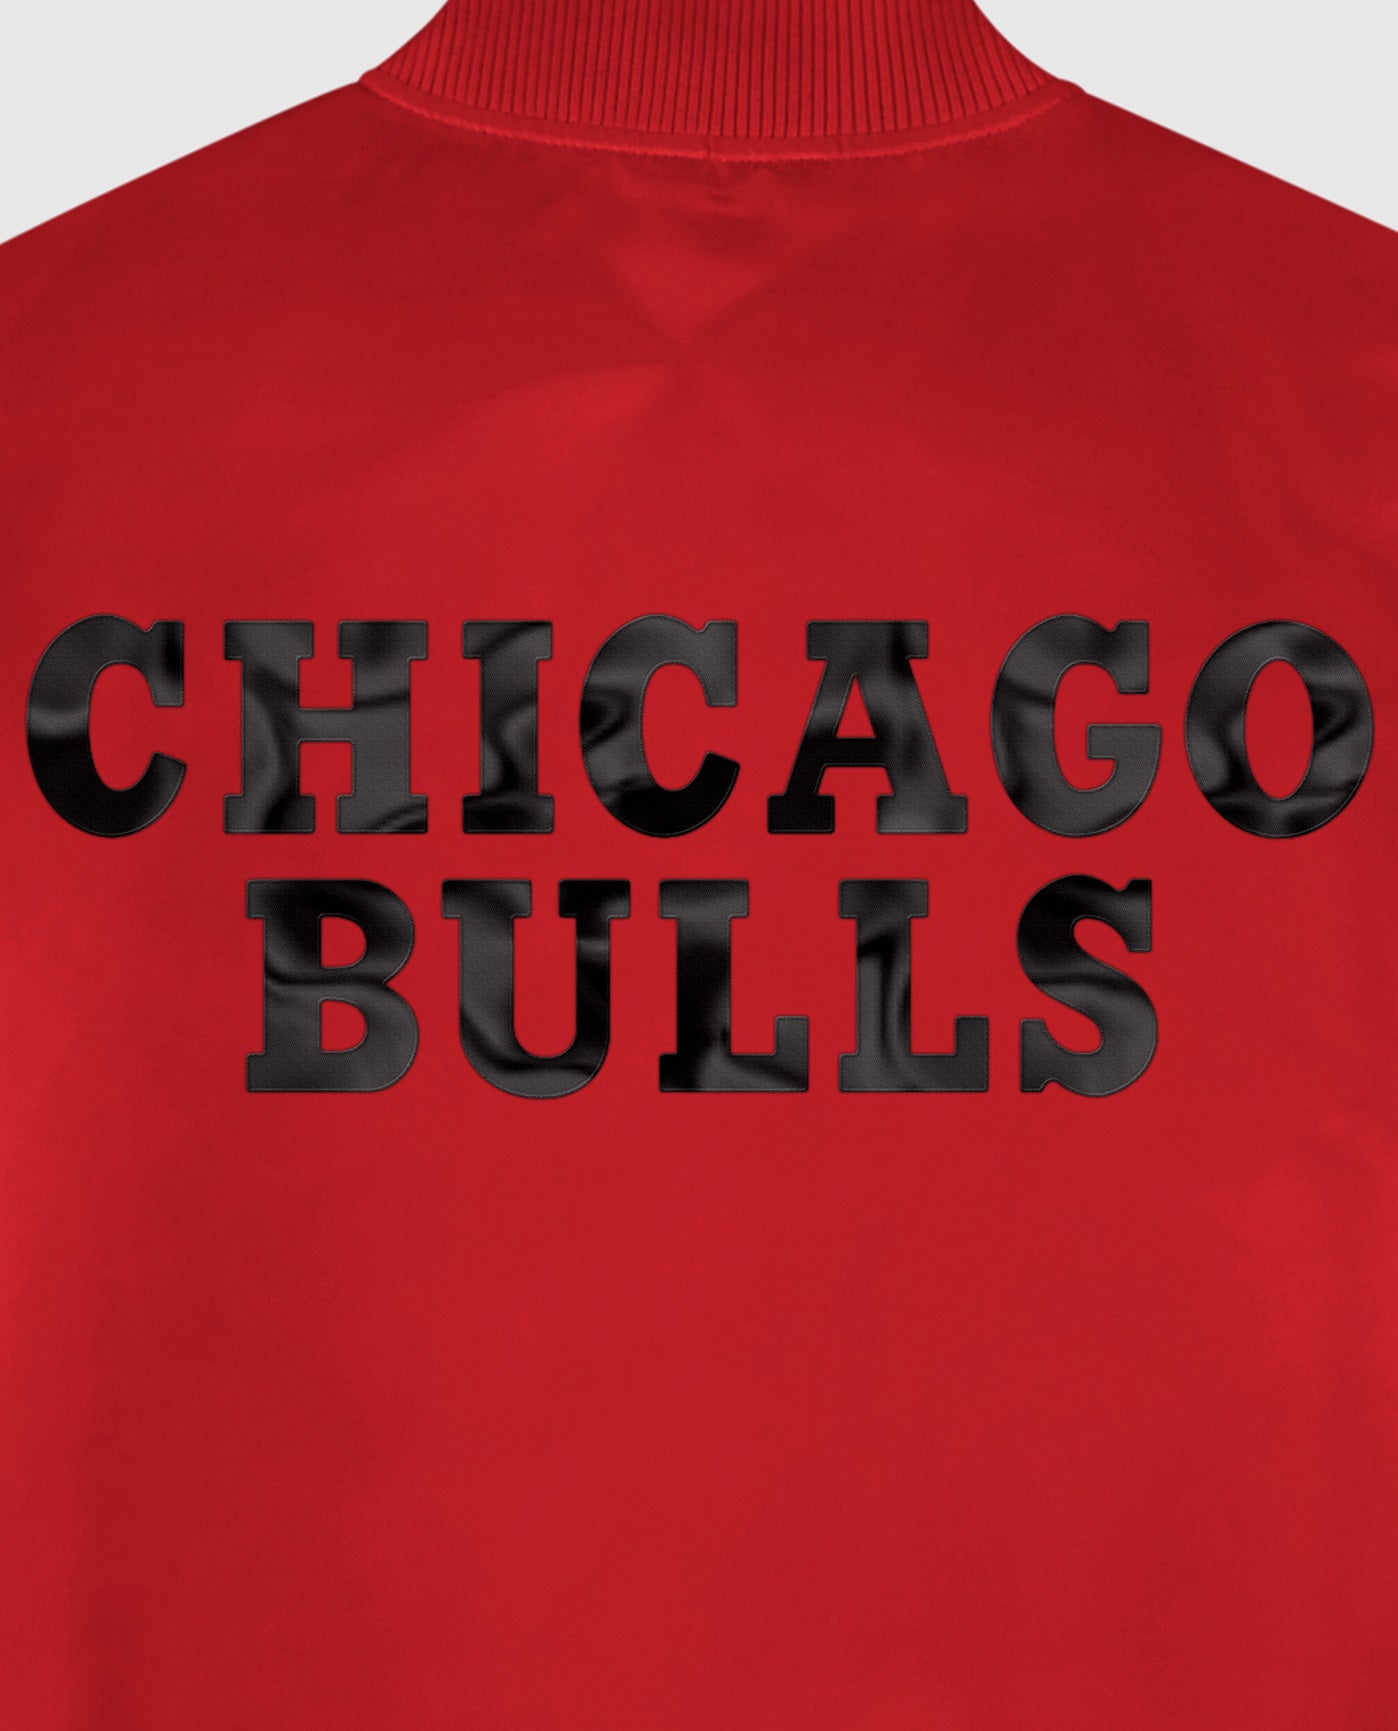 Chicago Bulls Starter Women's Competition Satin Full-Snap Jacket - Red